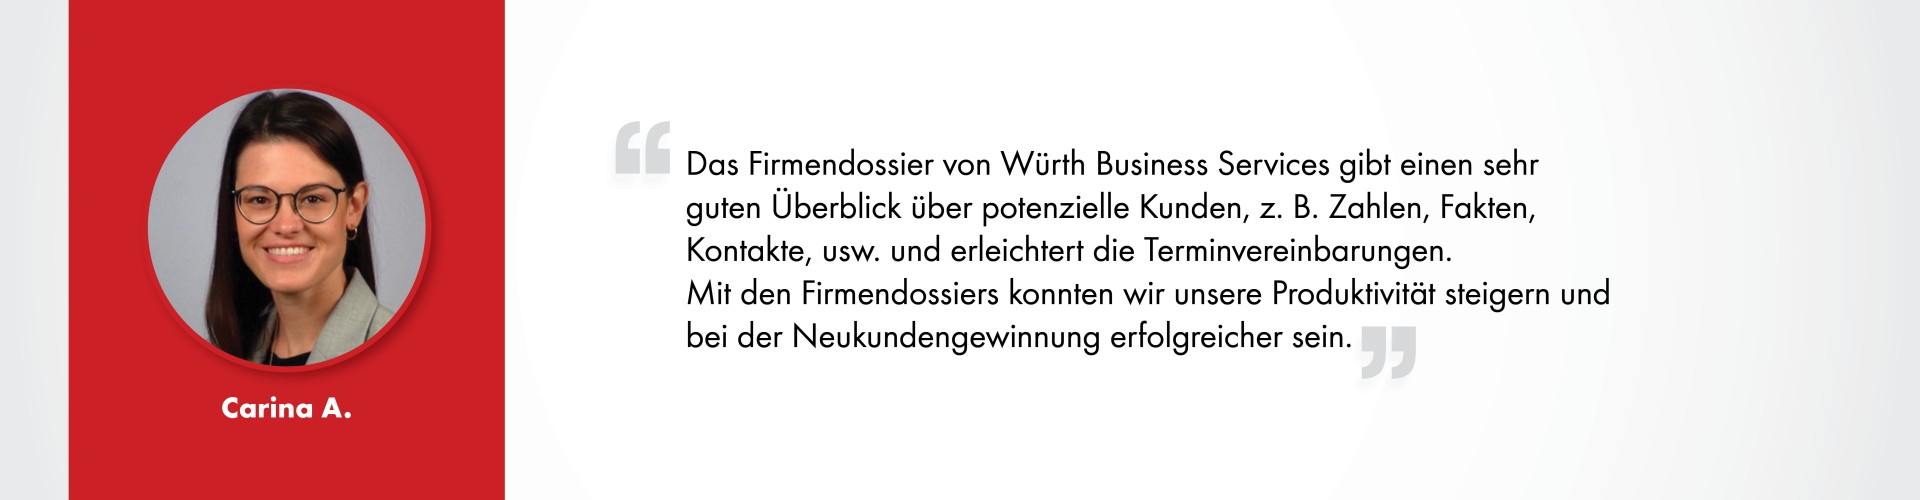 Carina A._Würth Business Services_Kundenstimmen